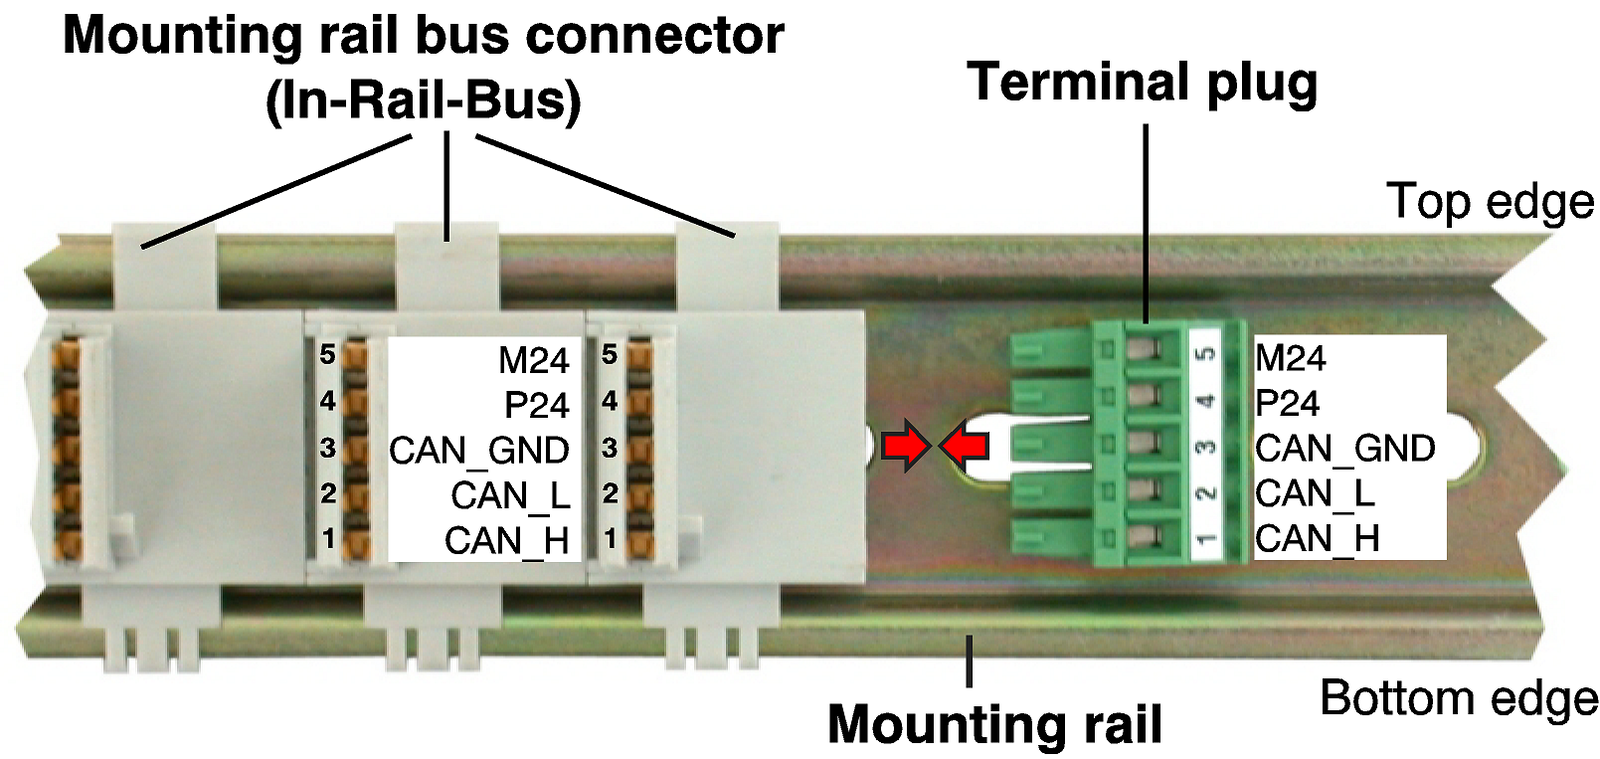 Image: Mounting rail with InRailBus and terminal plug